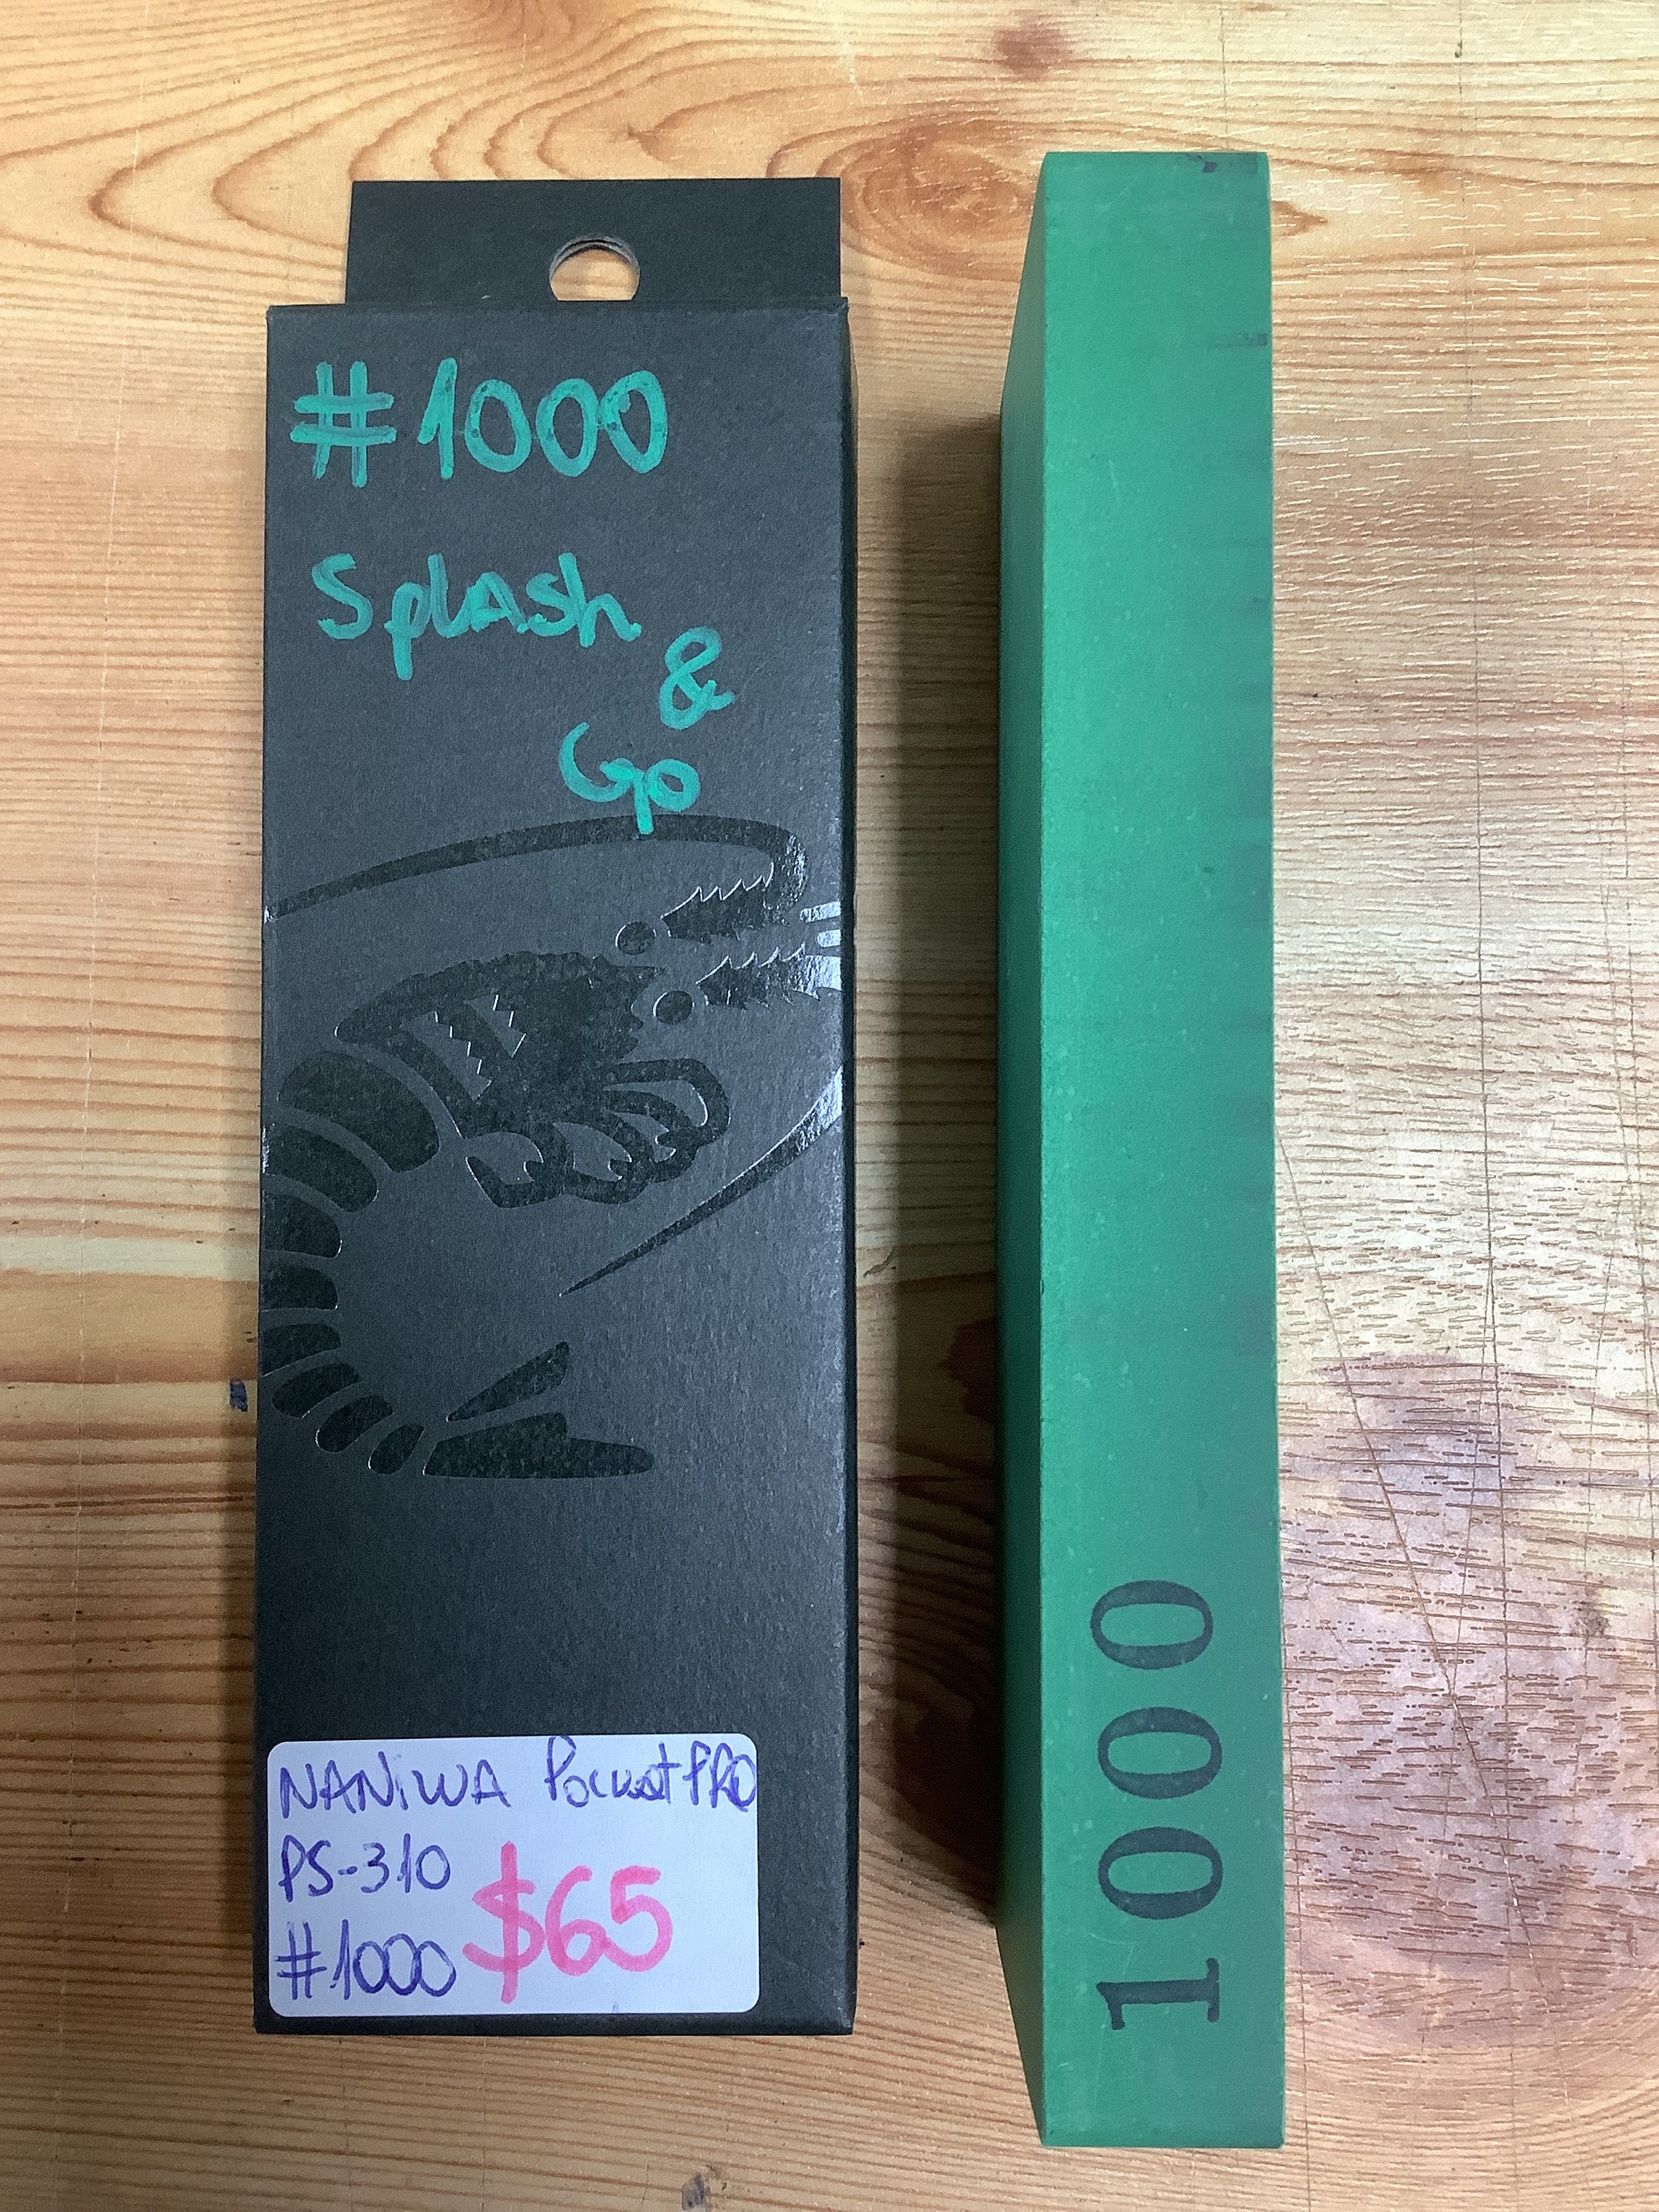 Naniwa Pocket Pro Stone #1000 Grit PS-310 - Koi Knives